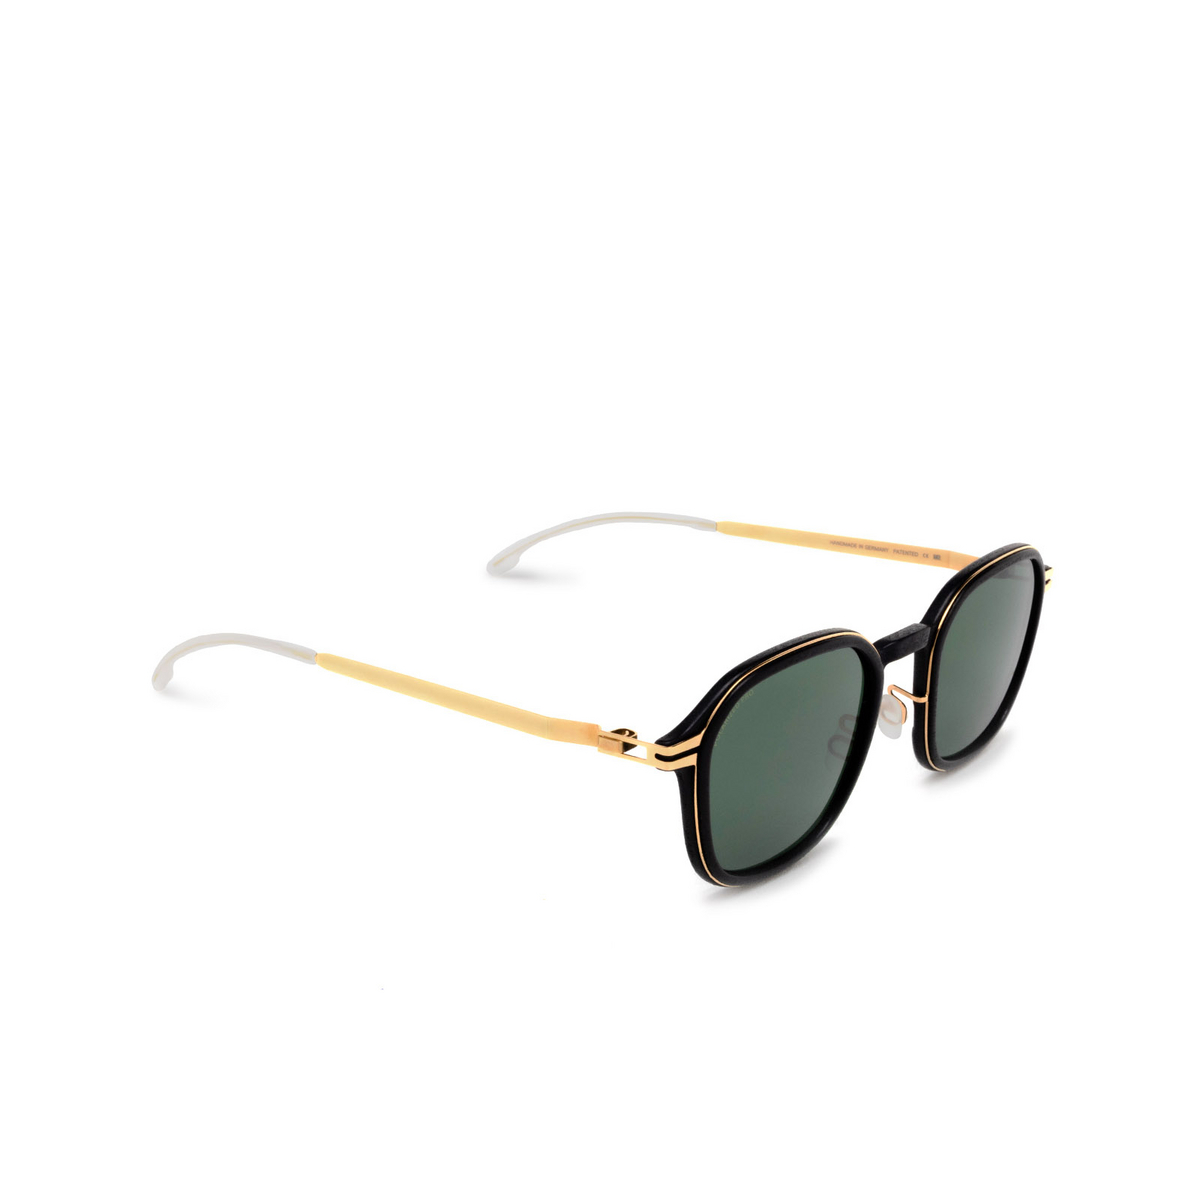 Mykita FIR Sunglasses 306 MH7 Pitch Black/Glossy Gold - three-quarters view